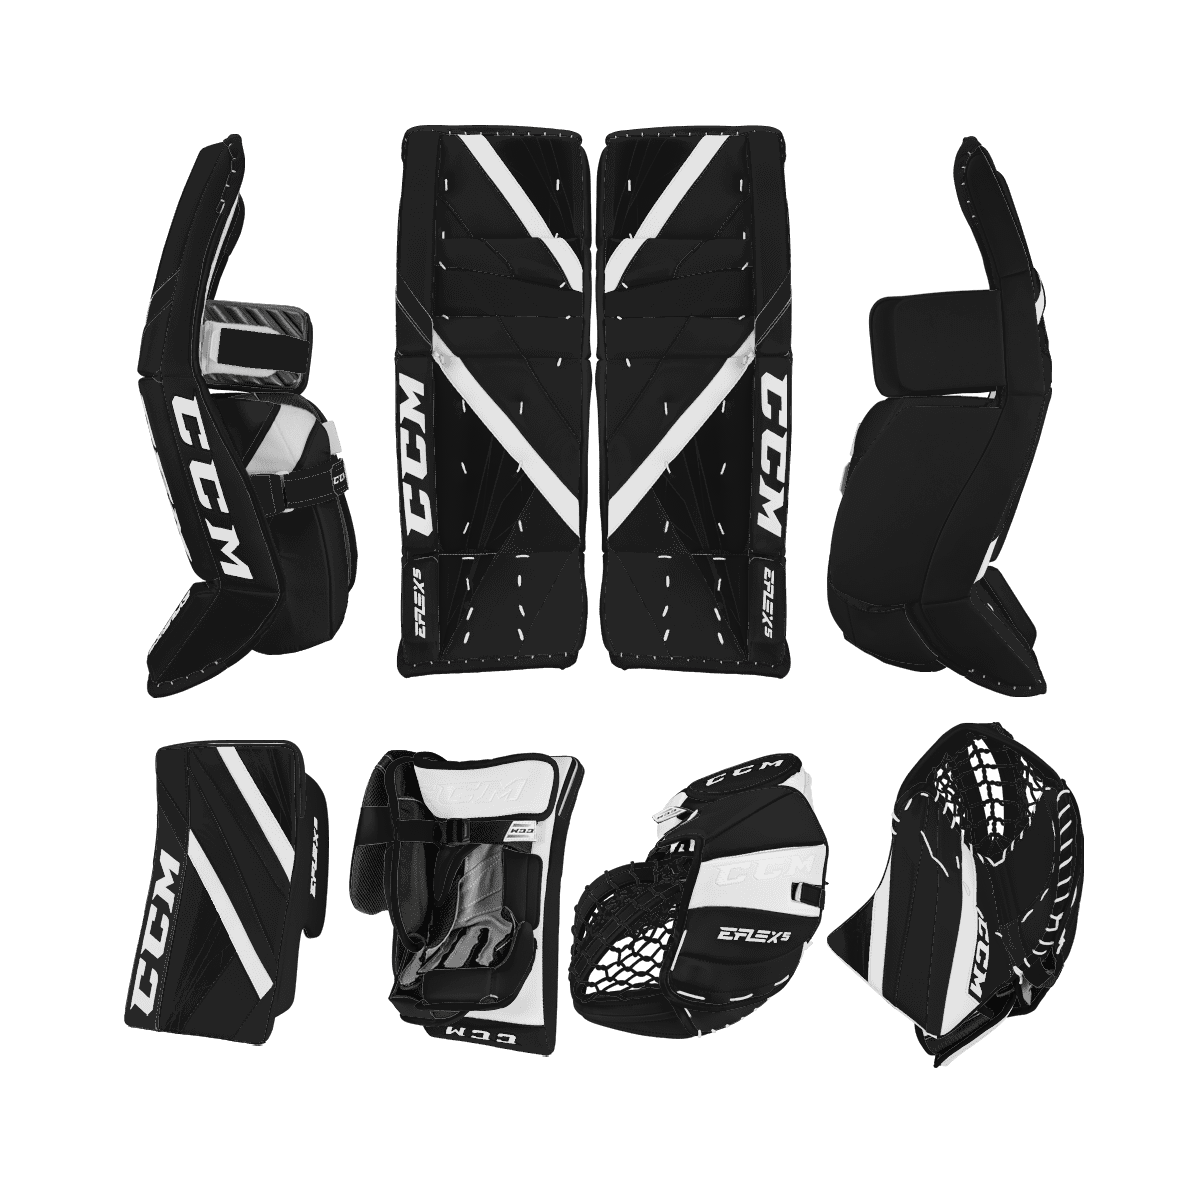 CCM Extreme Flex 5 Pro Goalie Equipment - Custom Design - Senior Black/White Inspiration